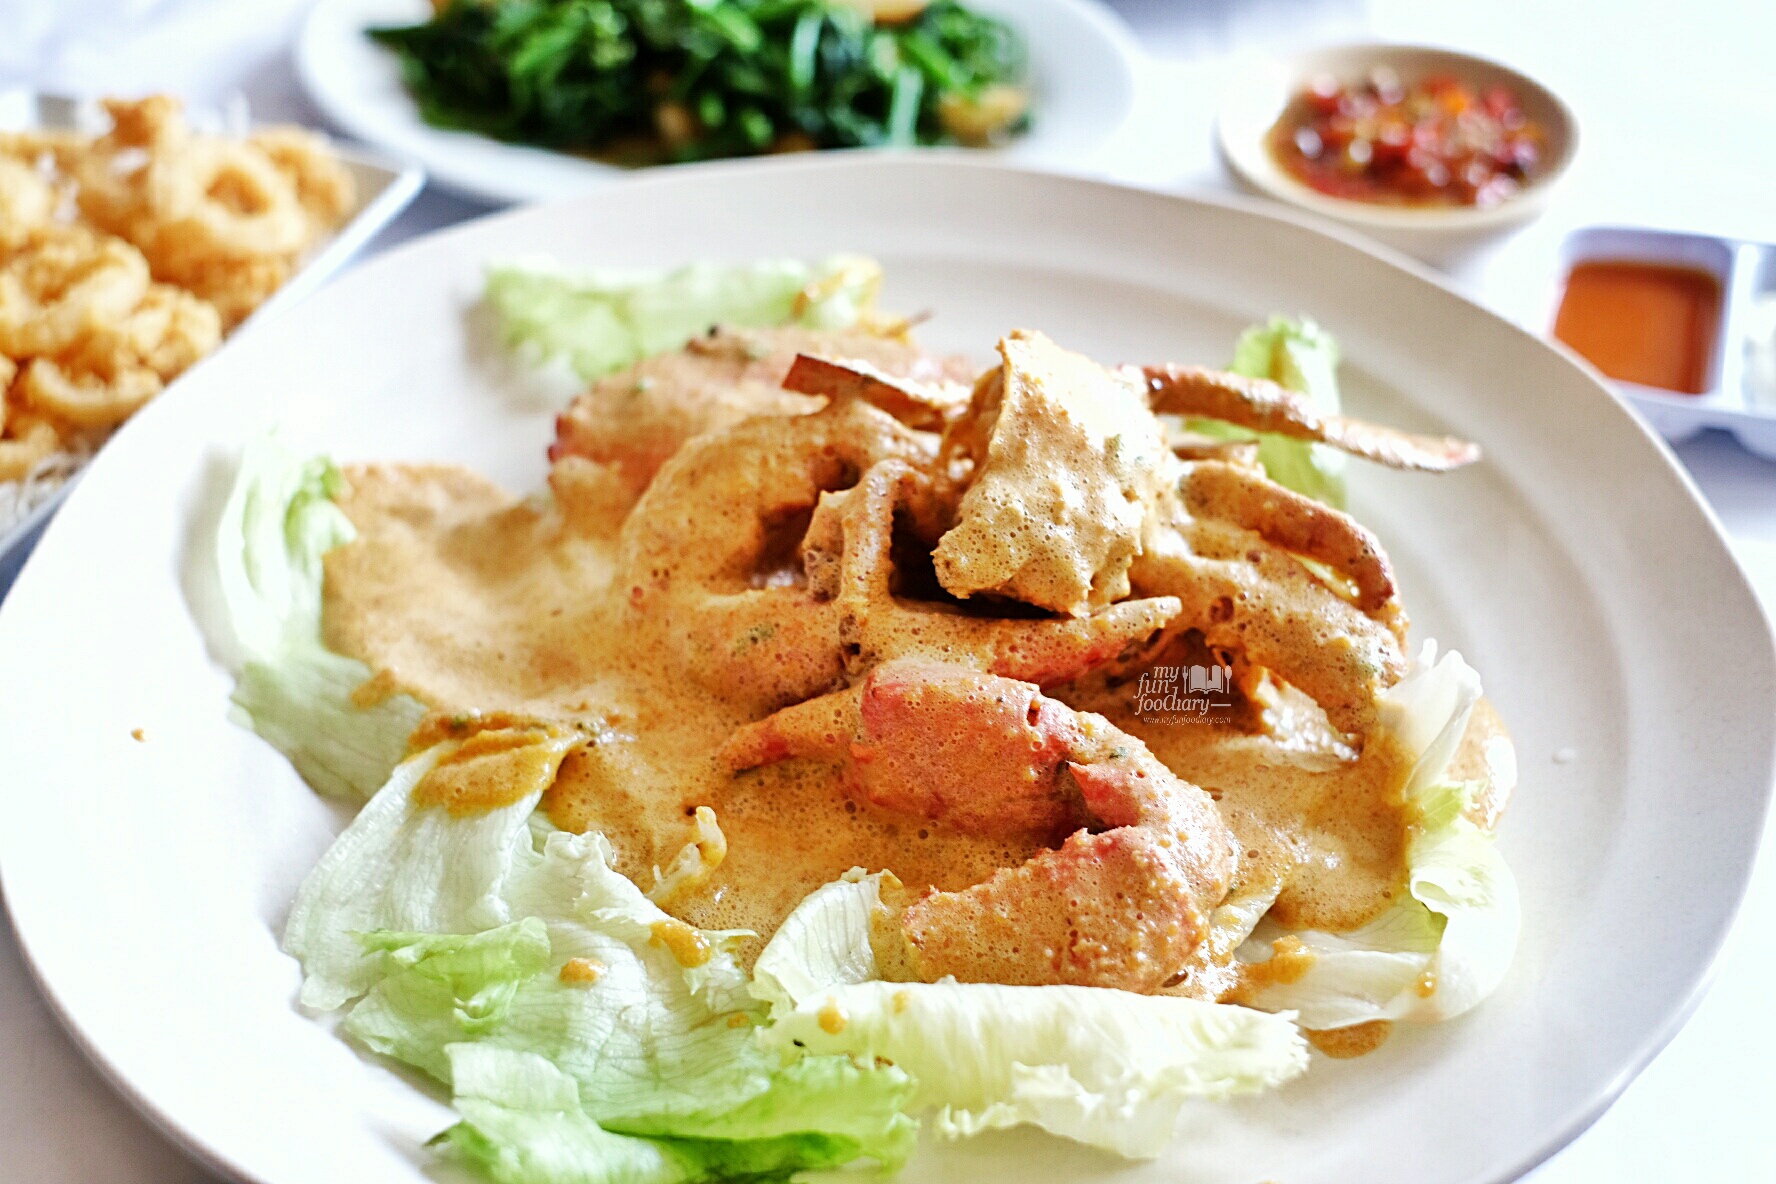 Kepiting Jantan Saus Telor Asin at Layar Seafood Jakarta by Myfunfoodiary 01